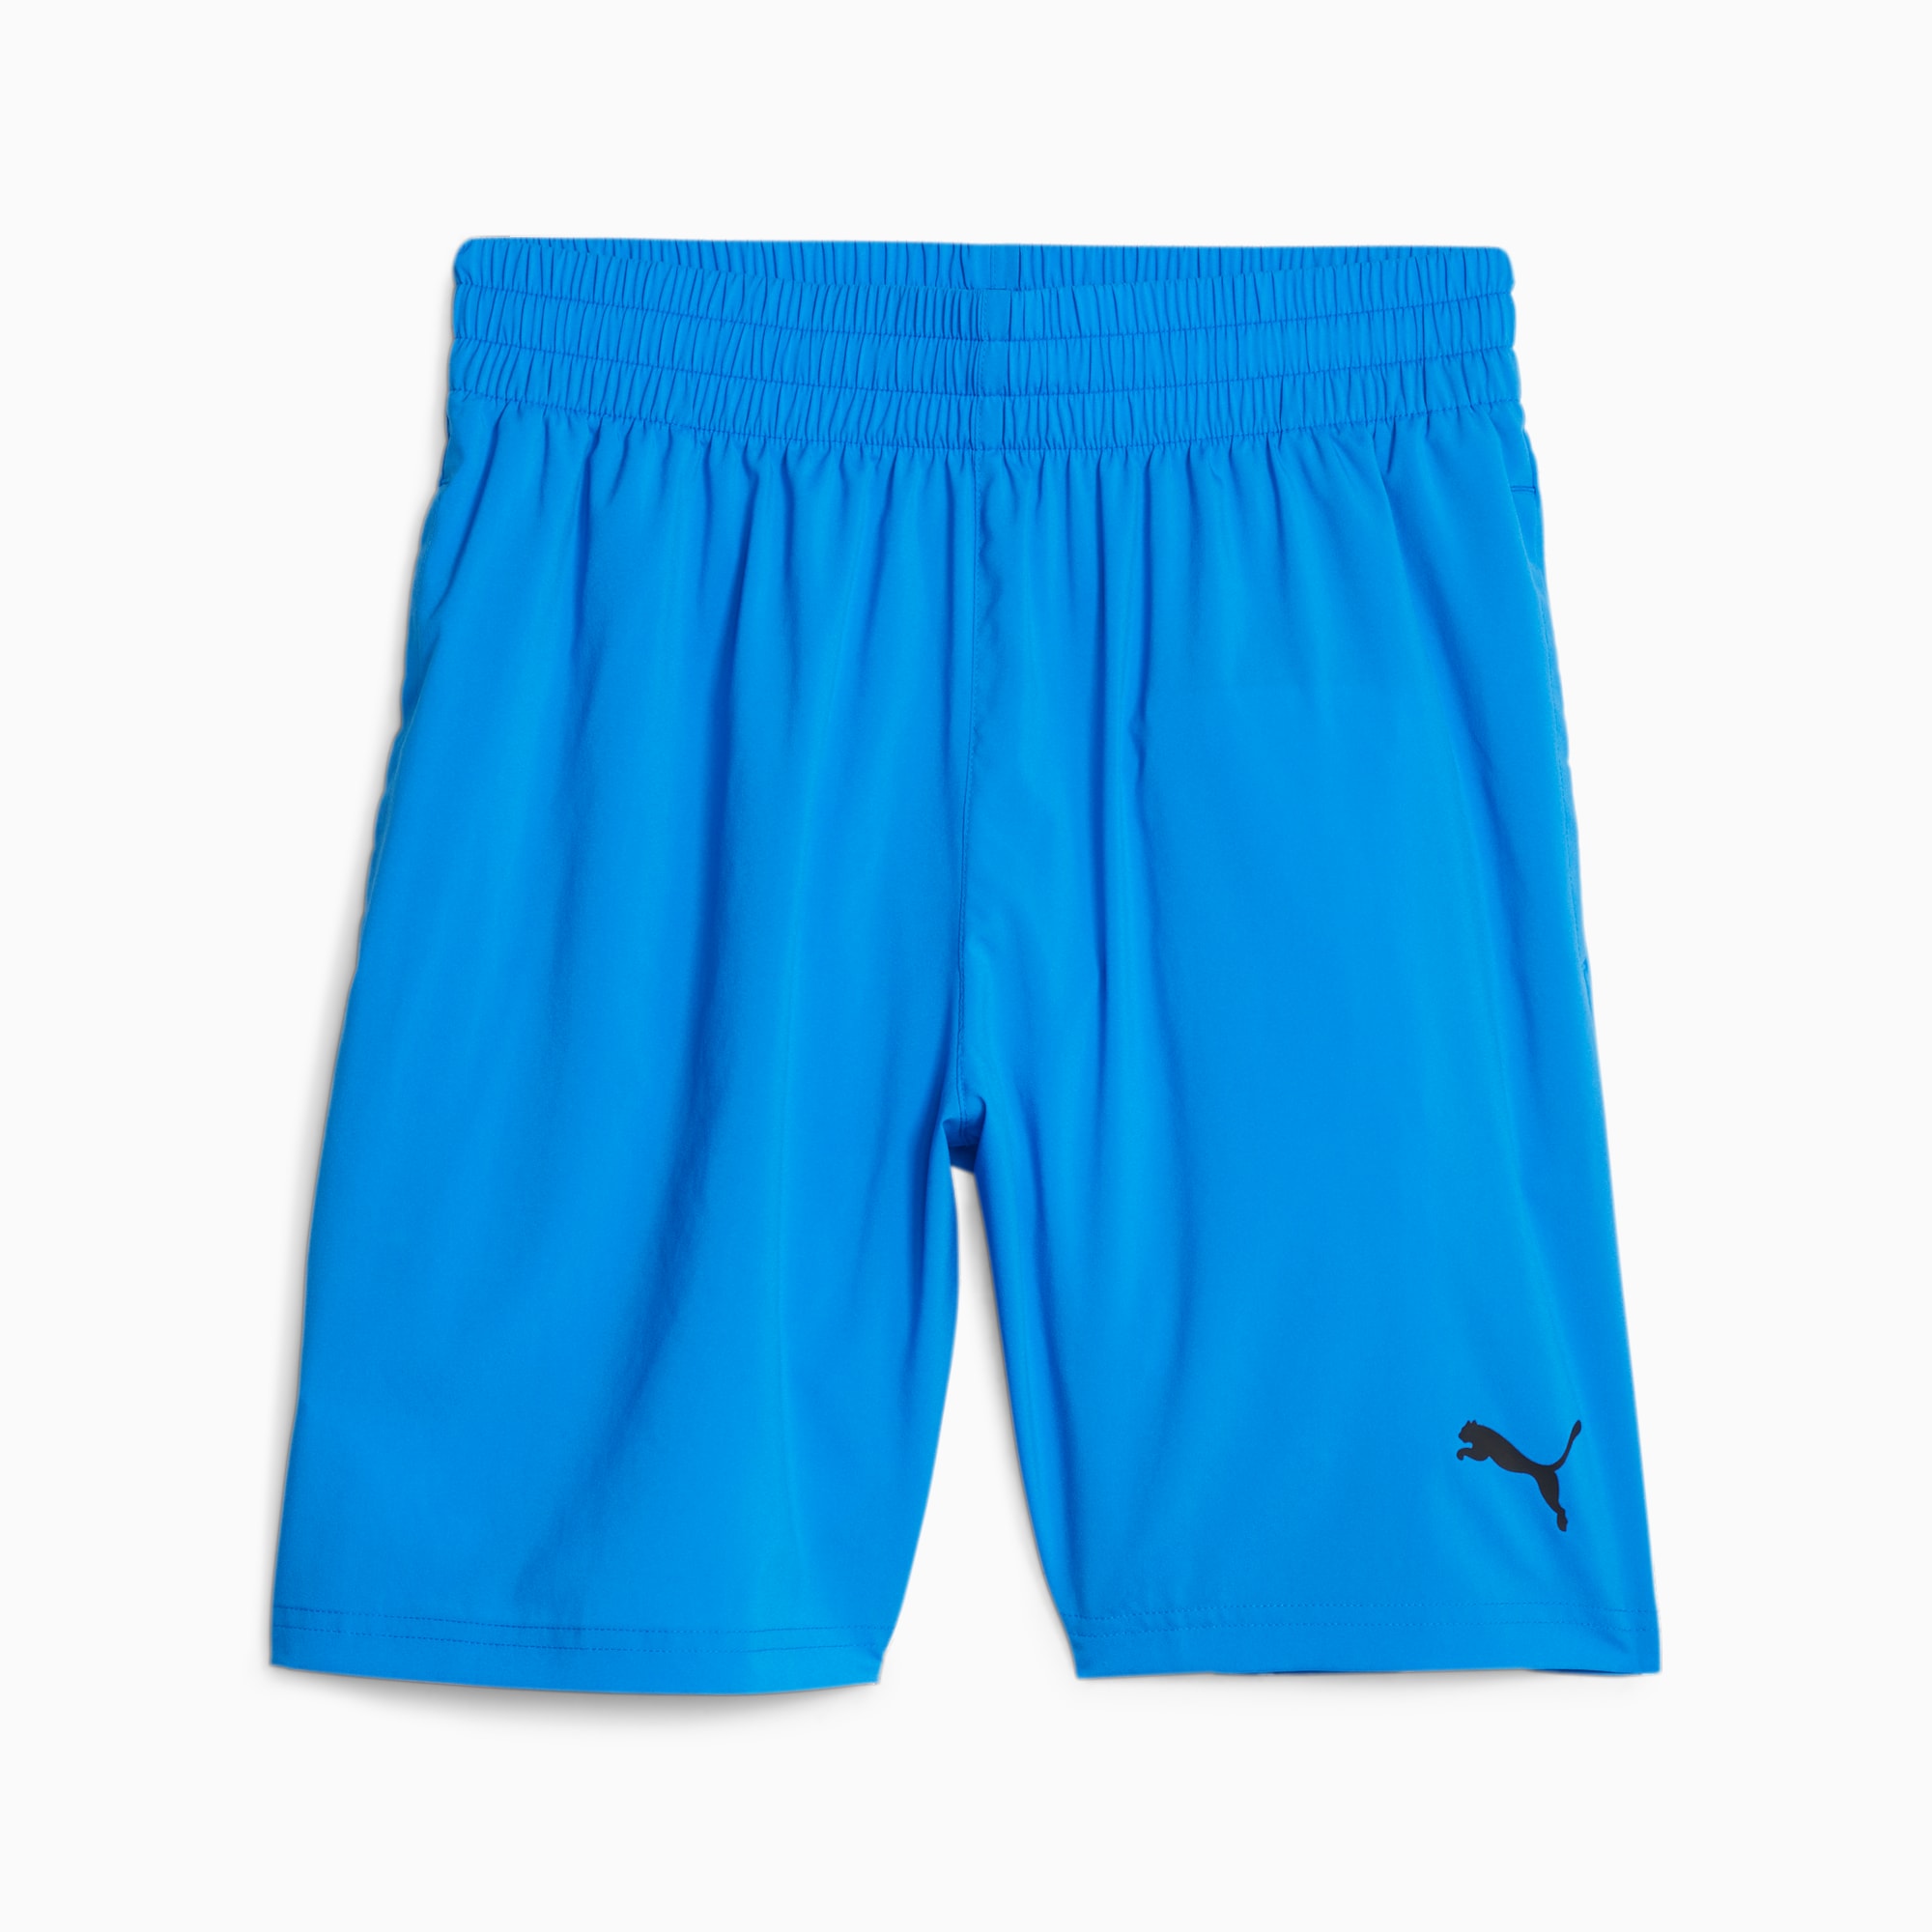 PUMA Favourite Blaster 7 Men's Training Shorts, Ultra Blue